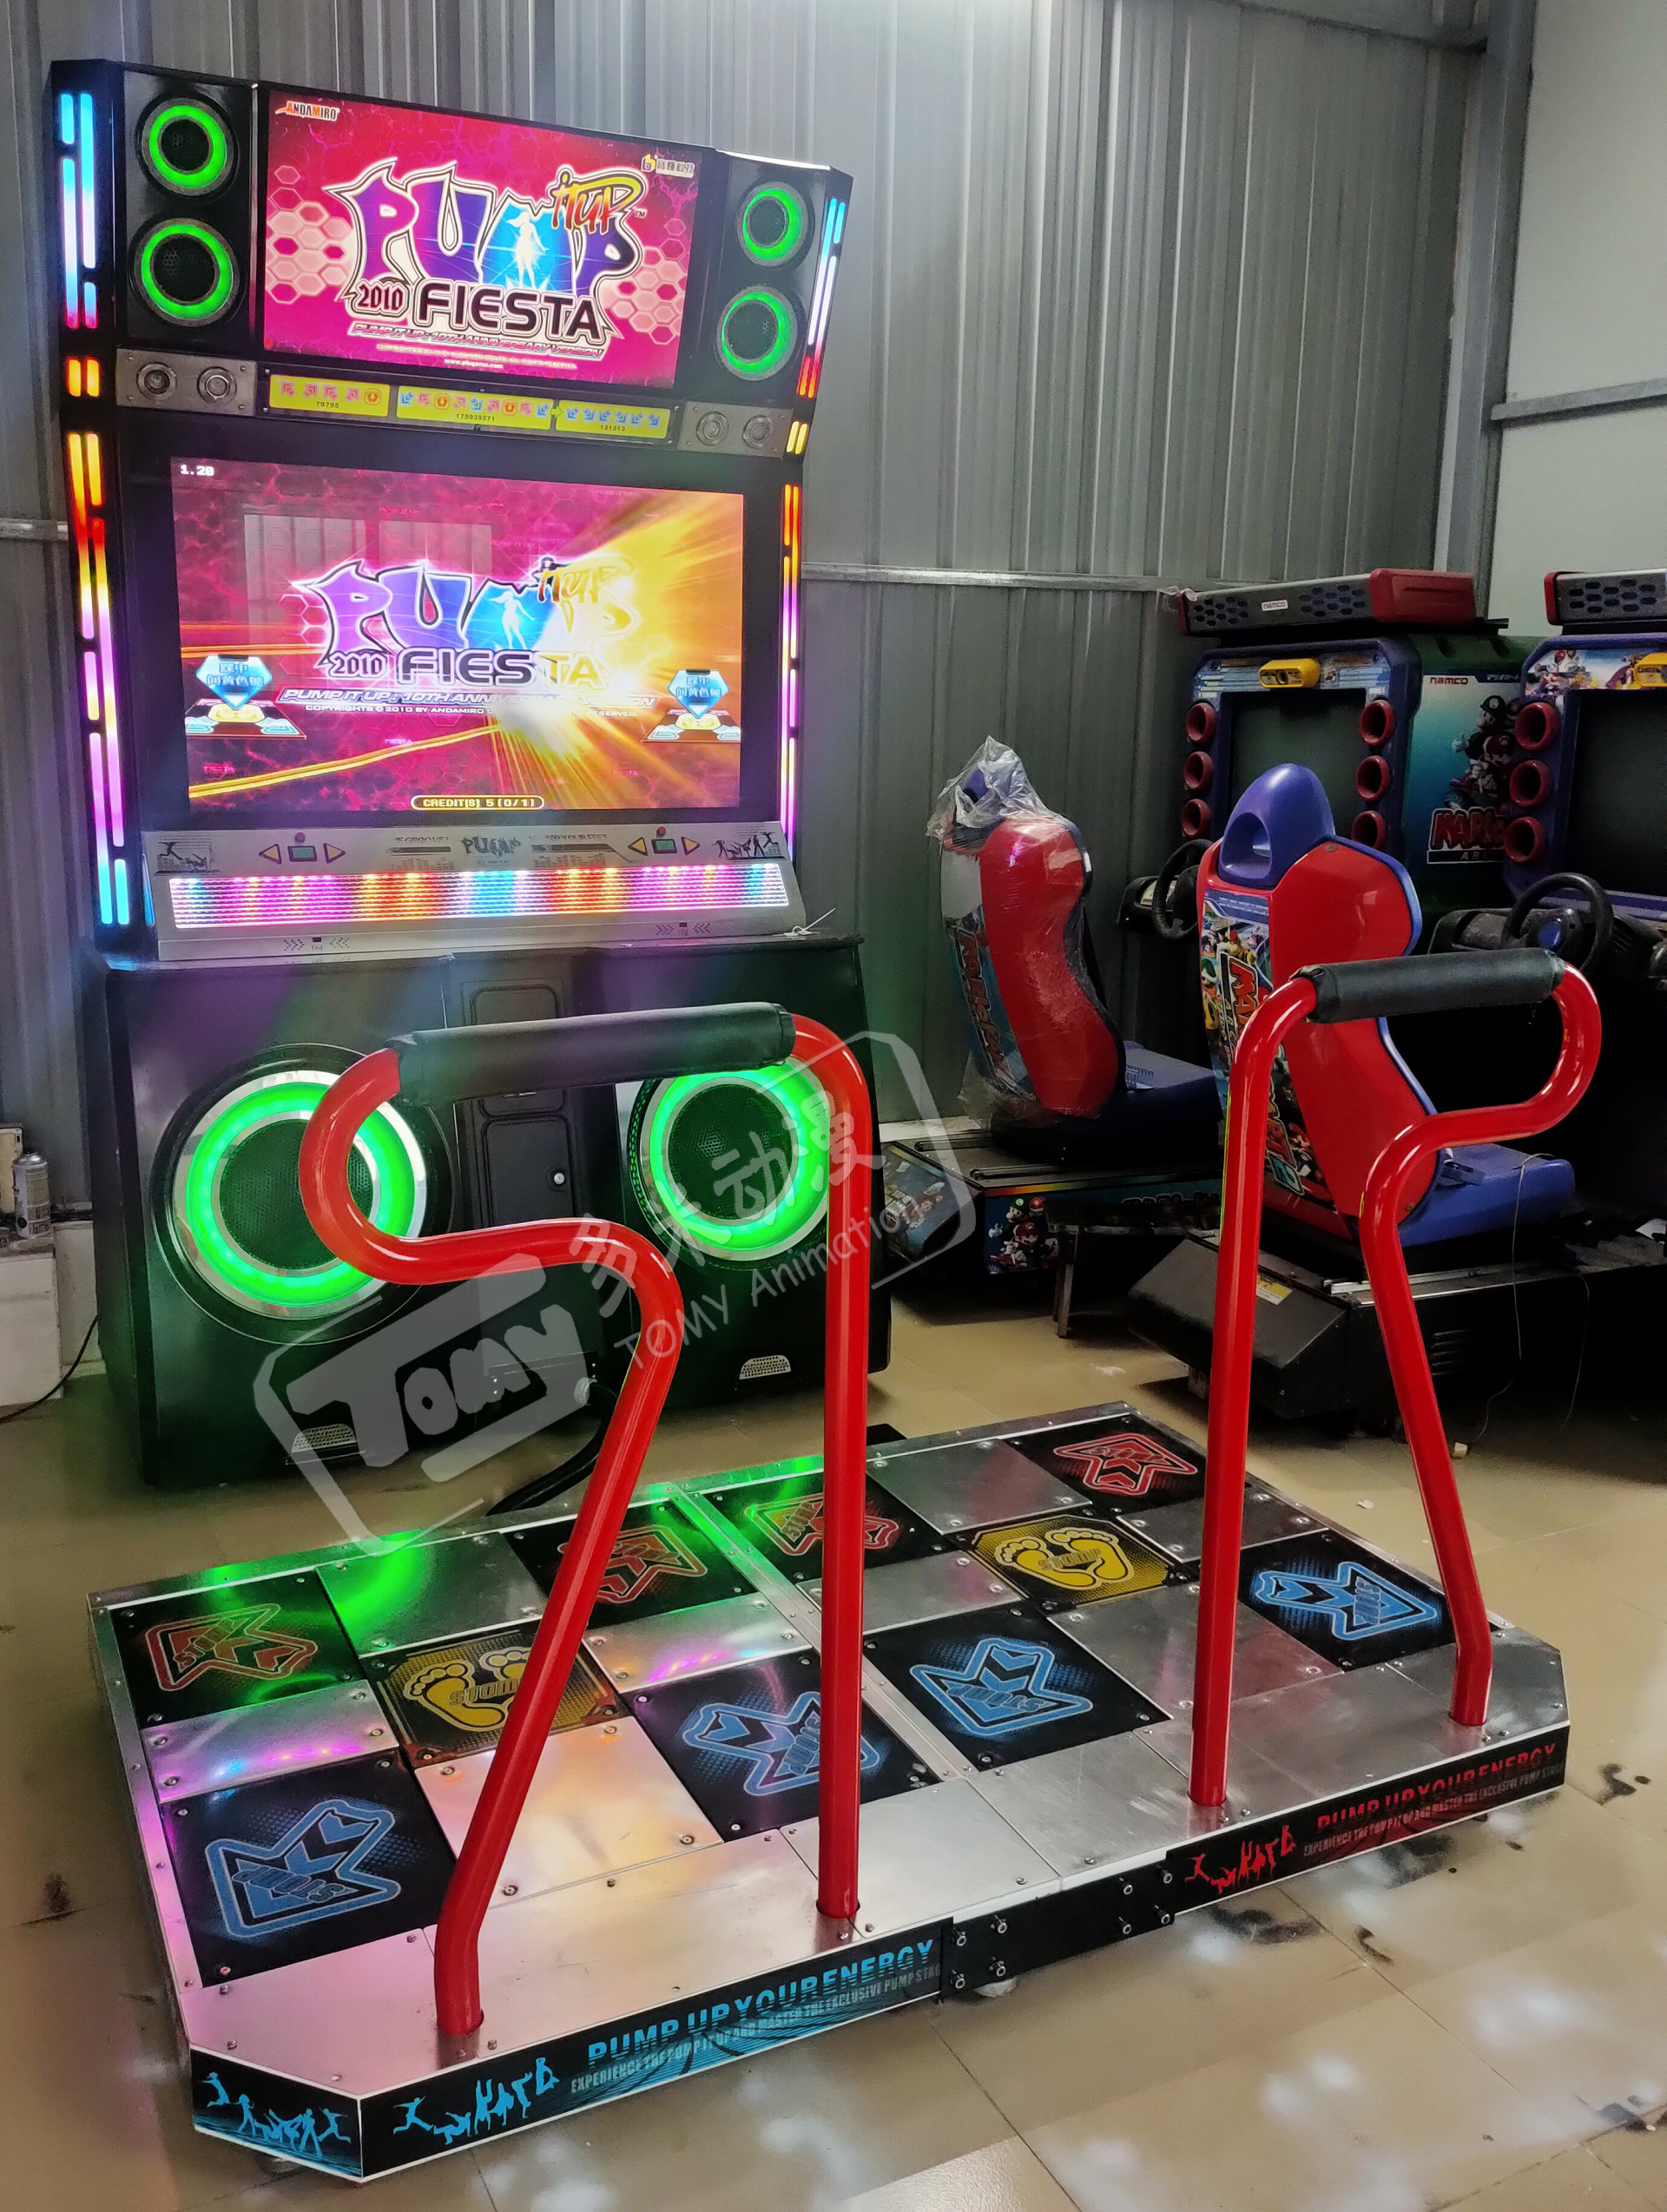 pump-it-up-fiesta-piu-2010-dancing-musice-arcade-game-machine-tomy-arcade-workshop-process